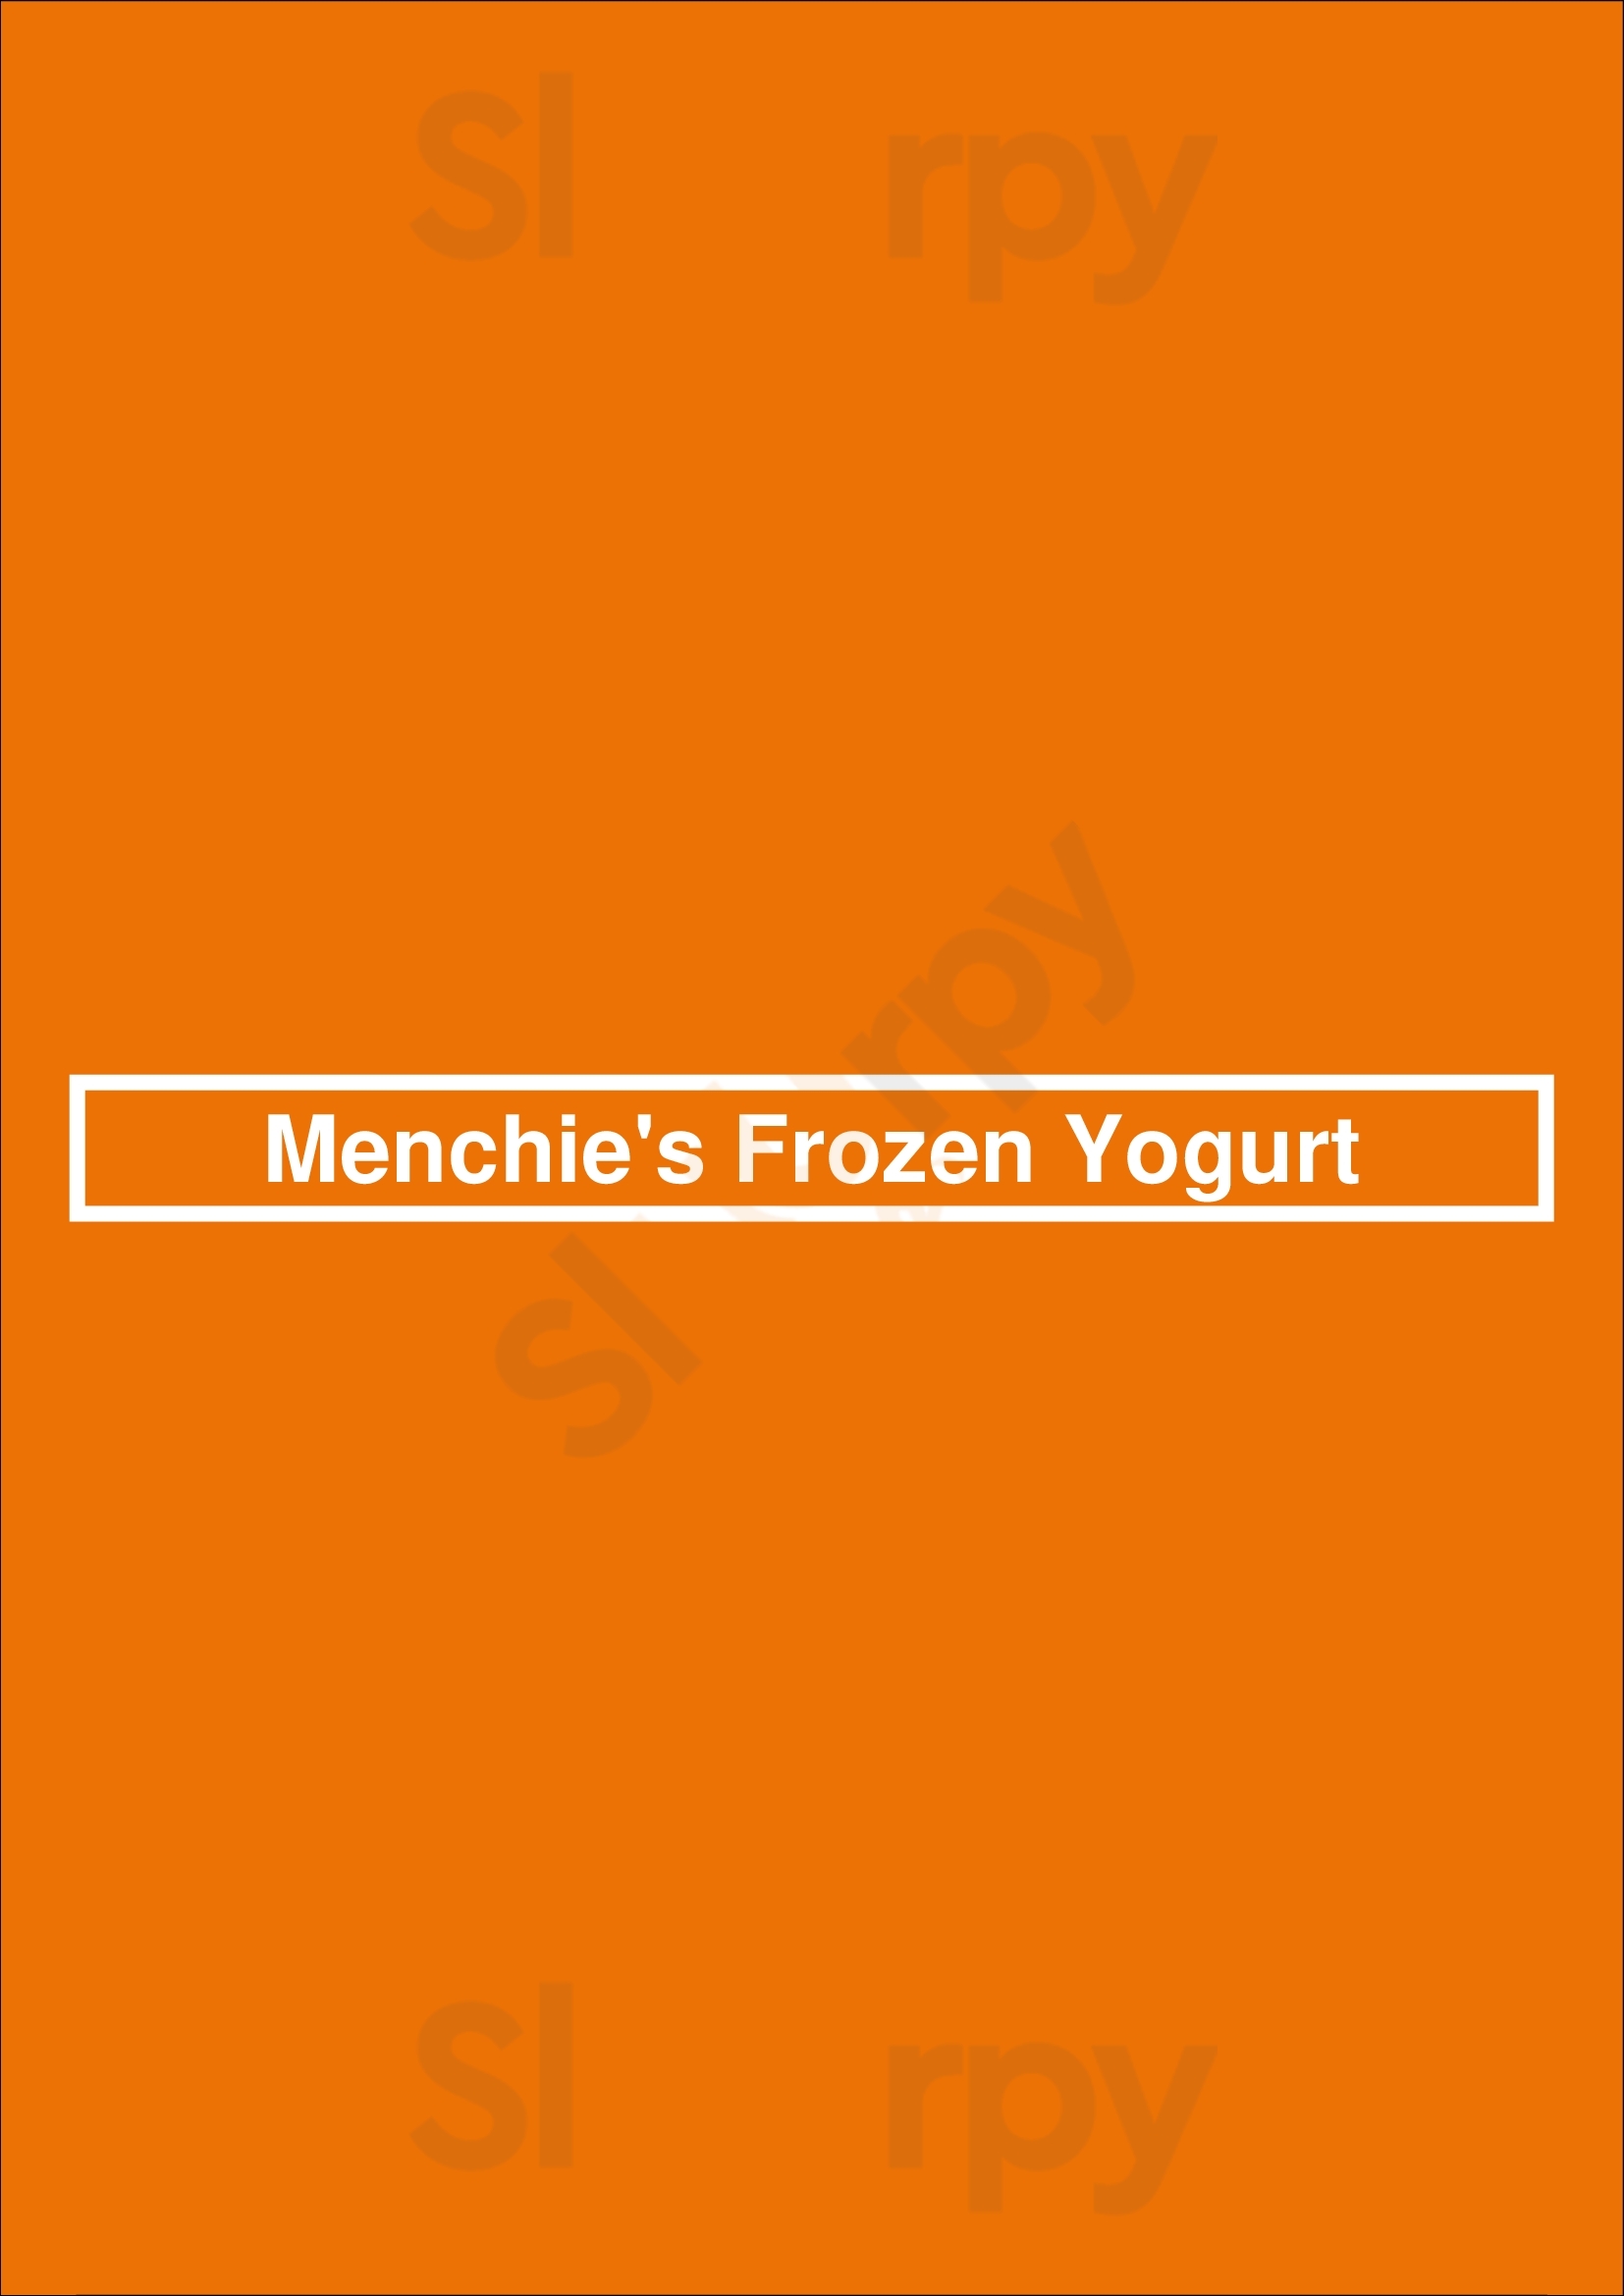 Menchie's Frozen Yogurt Lafayette Menu - 1